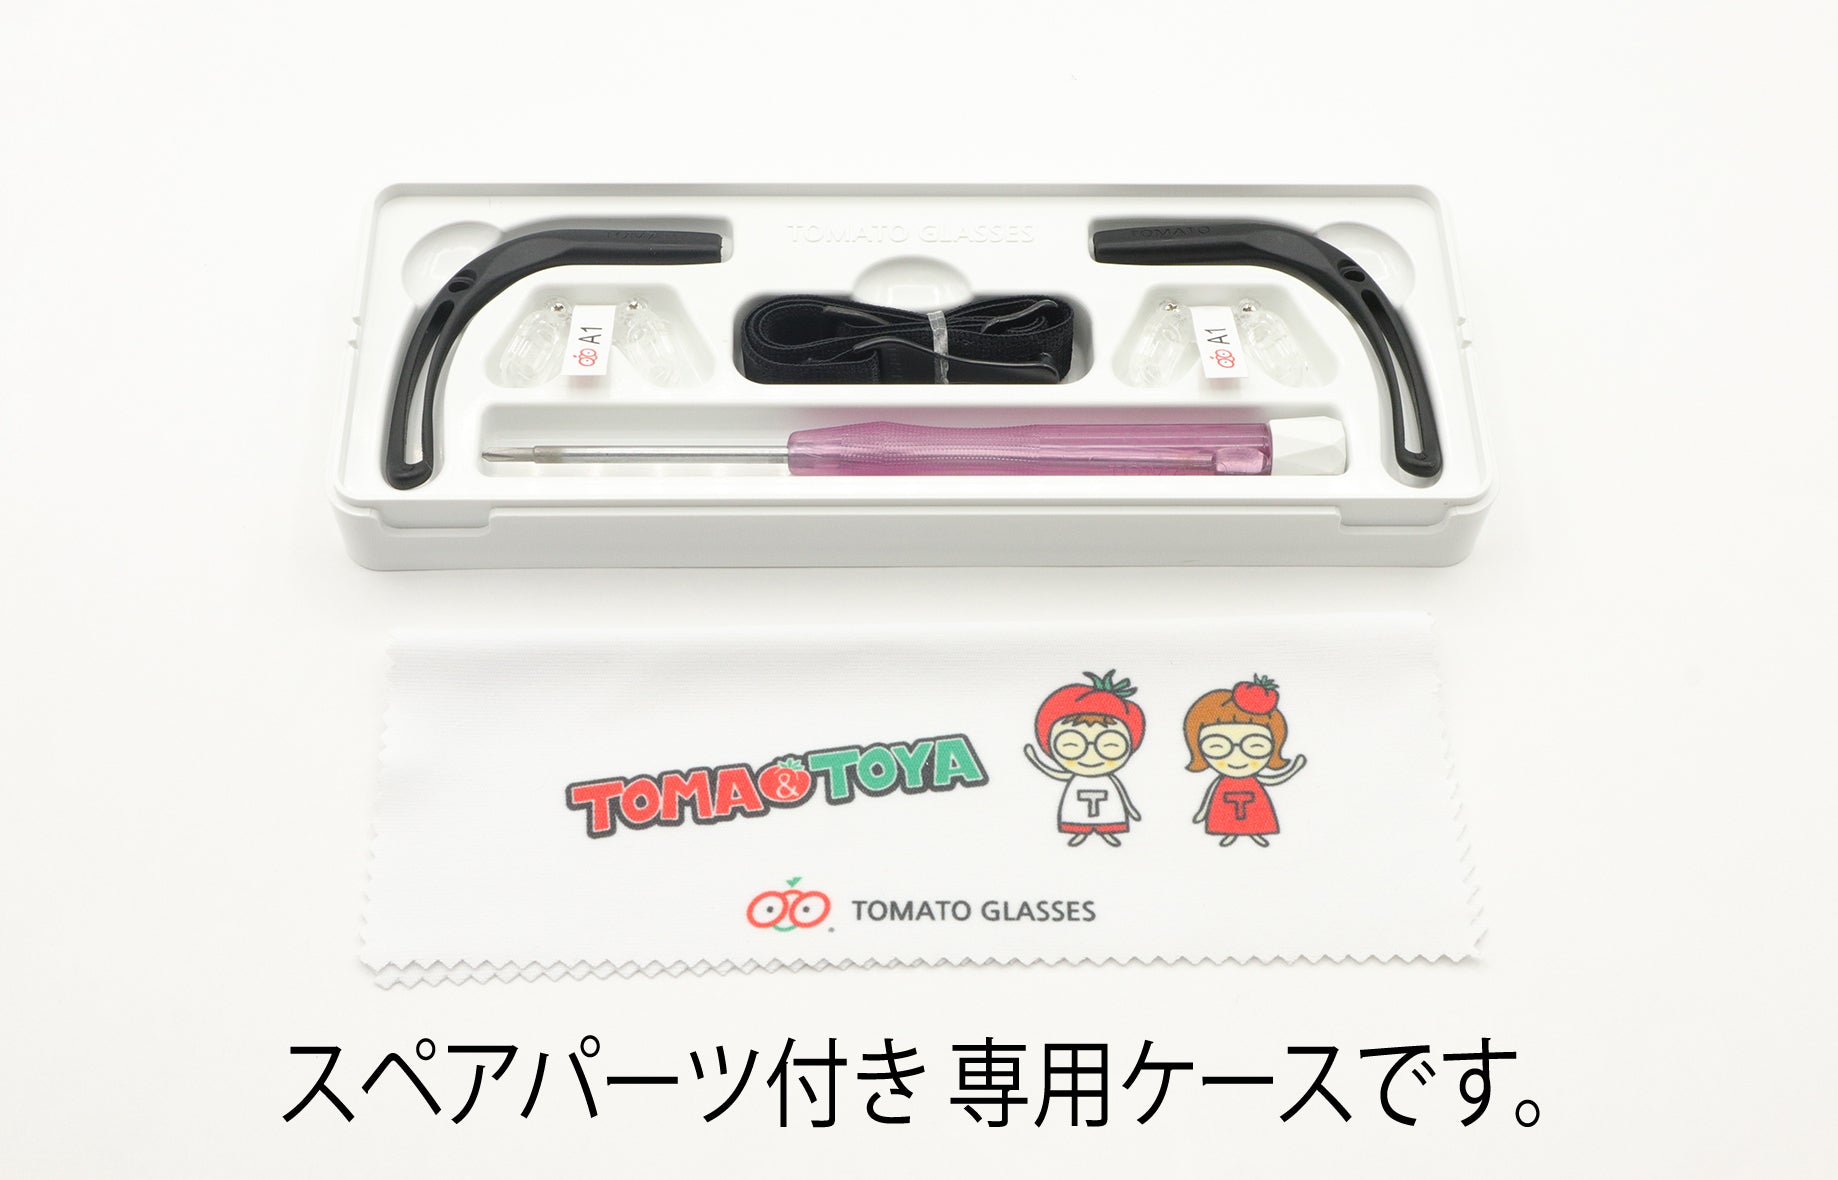 TOMATO GLASSES(トマトグラッシーズ) TKAC25ブラック(43サイズ)